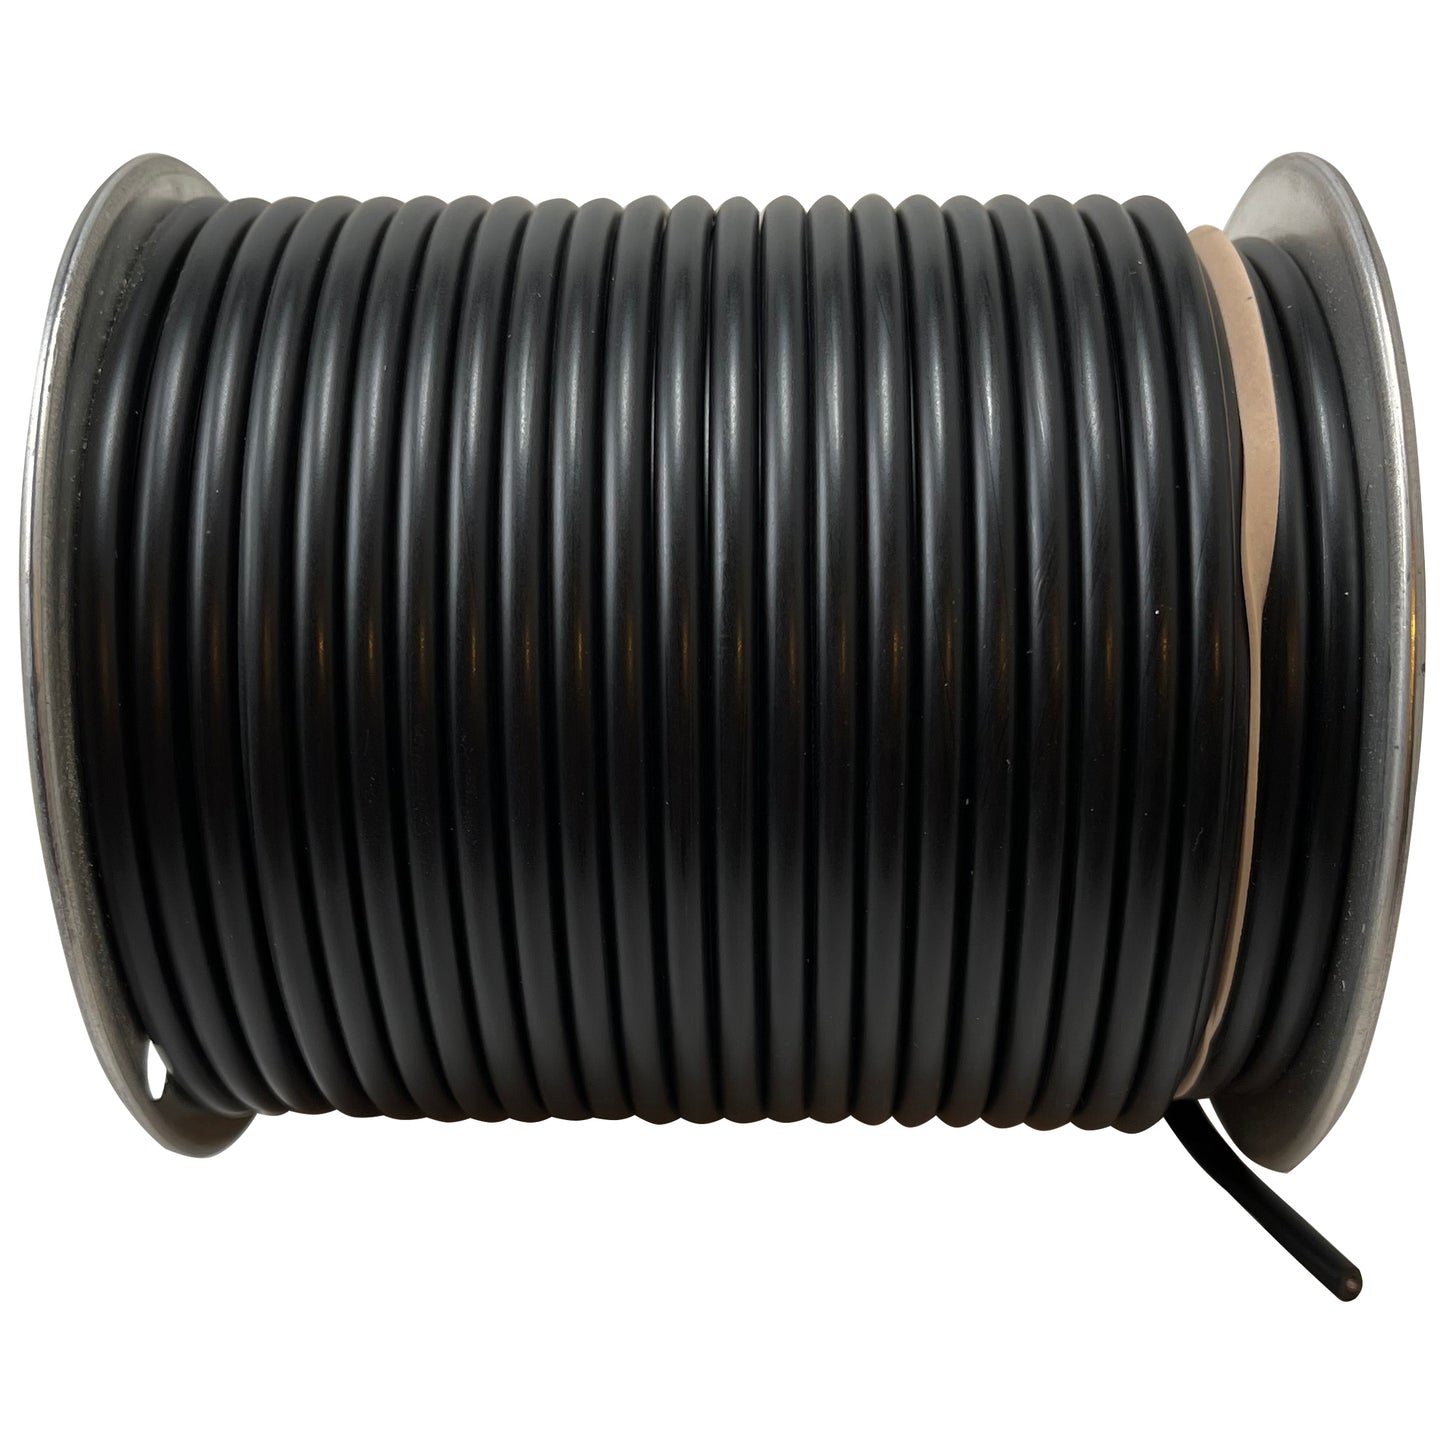 20 Gauge Universal Automotive Fusible Link Wire - 100' FT Spool